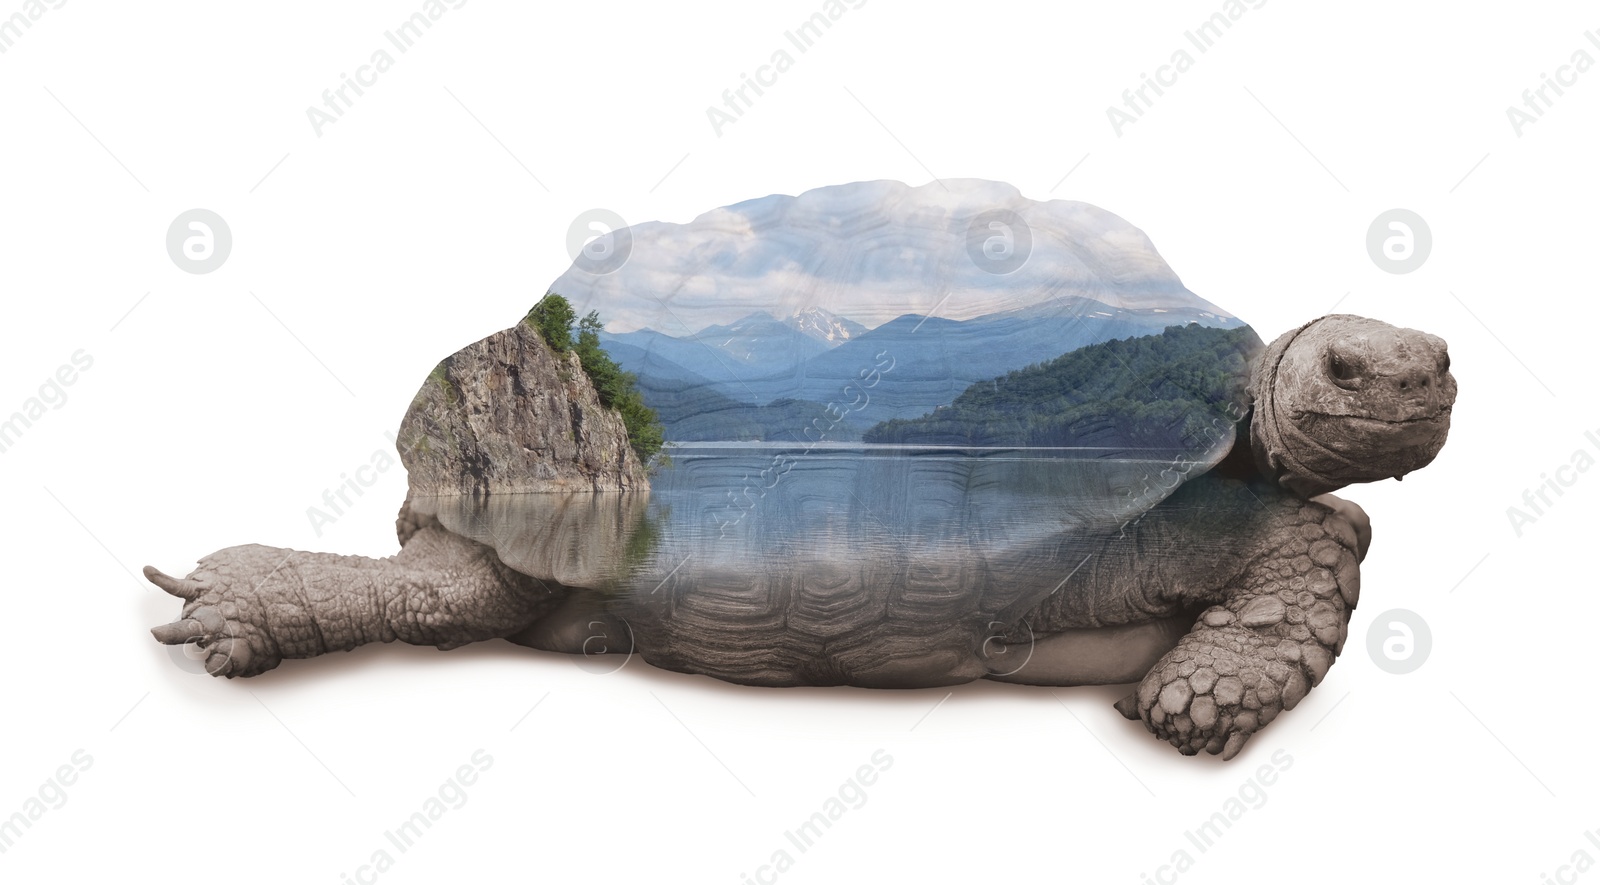 Image of Double exposure of tortoise and lake between hills